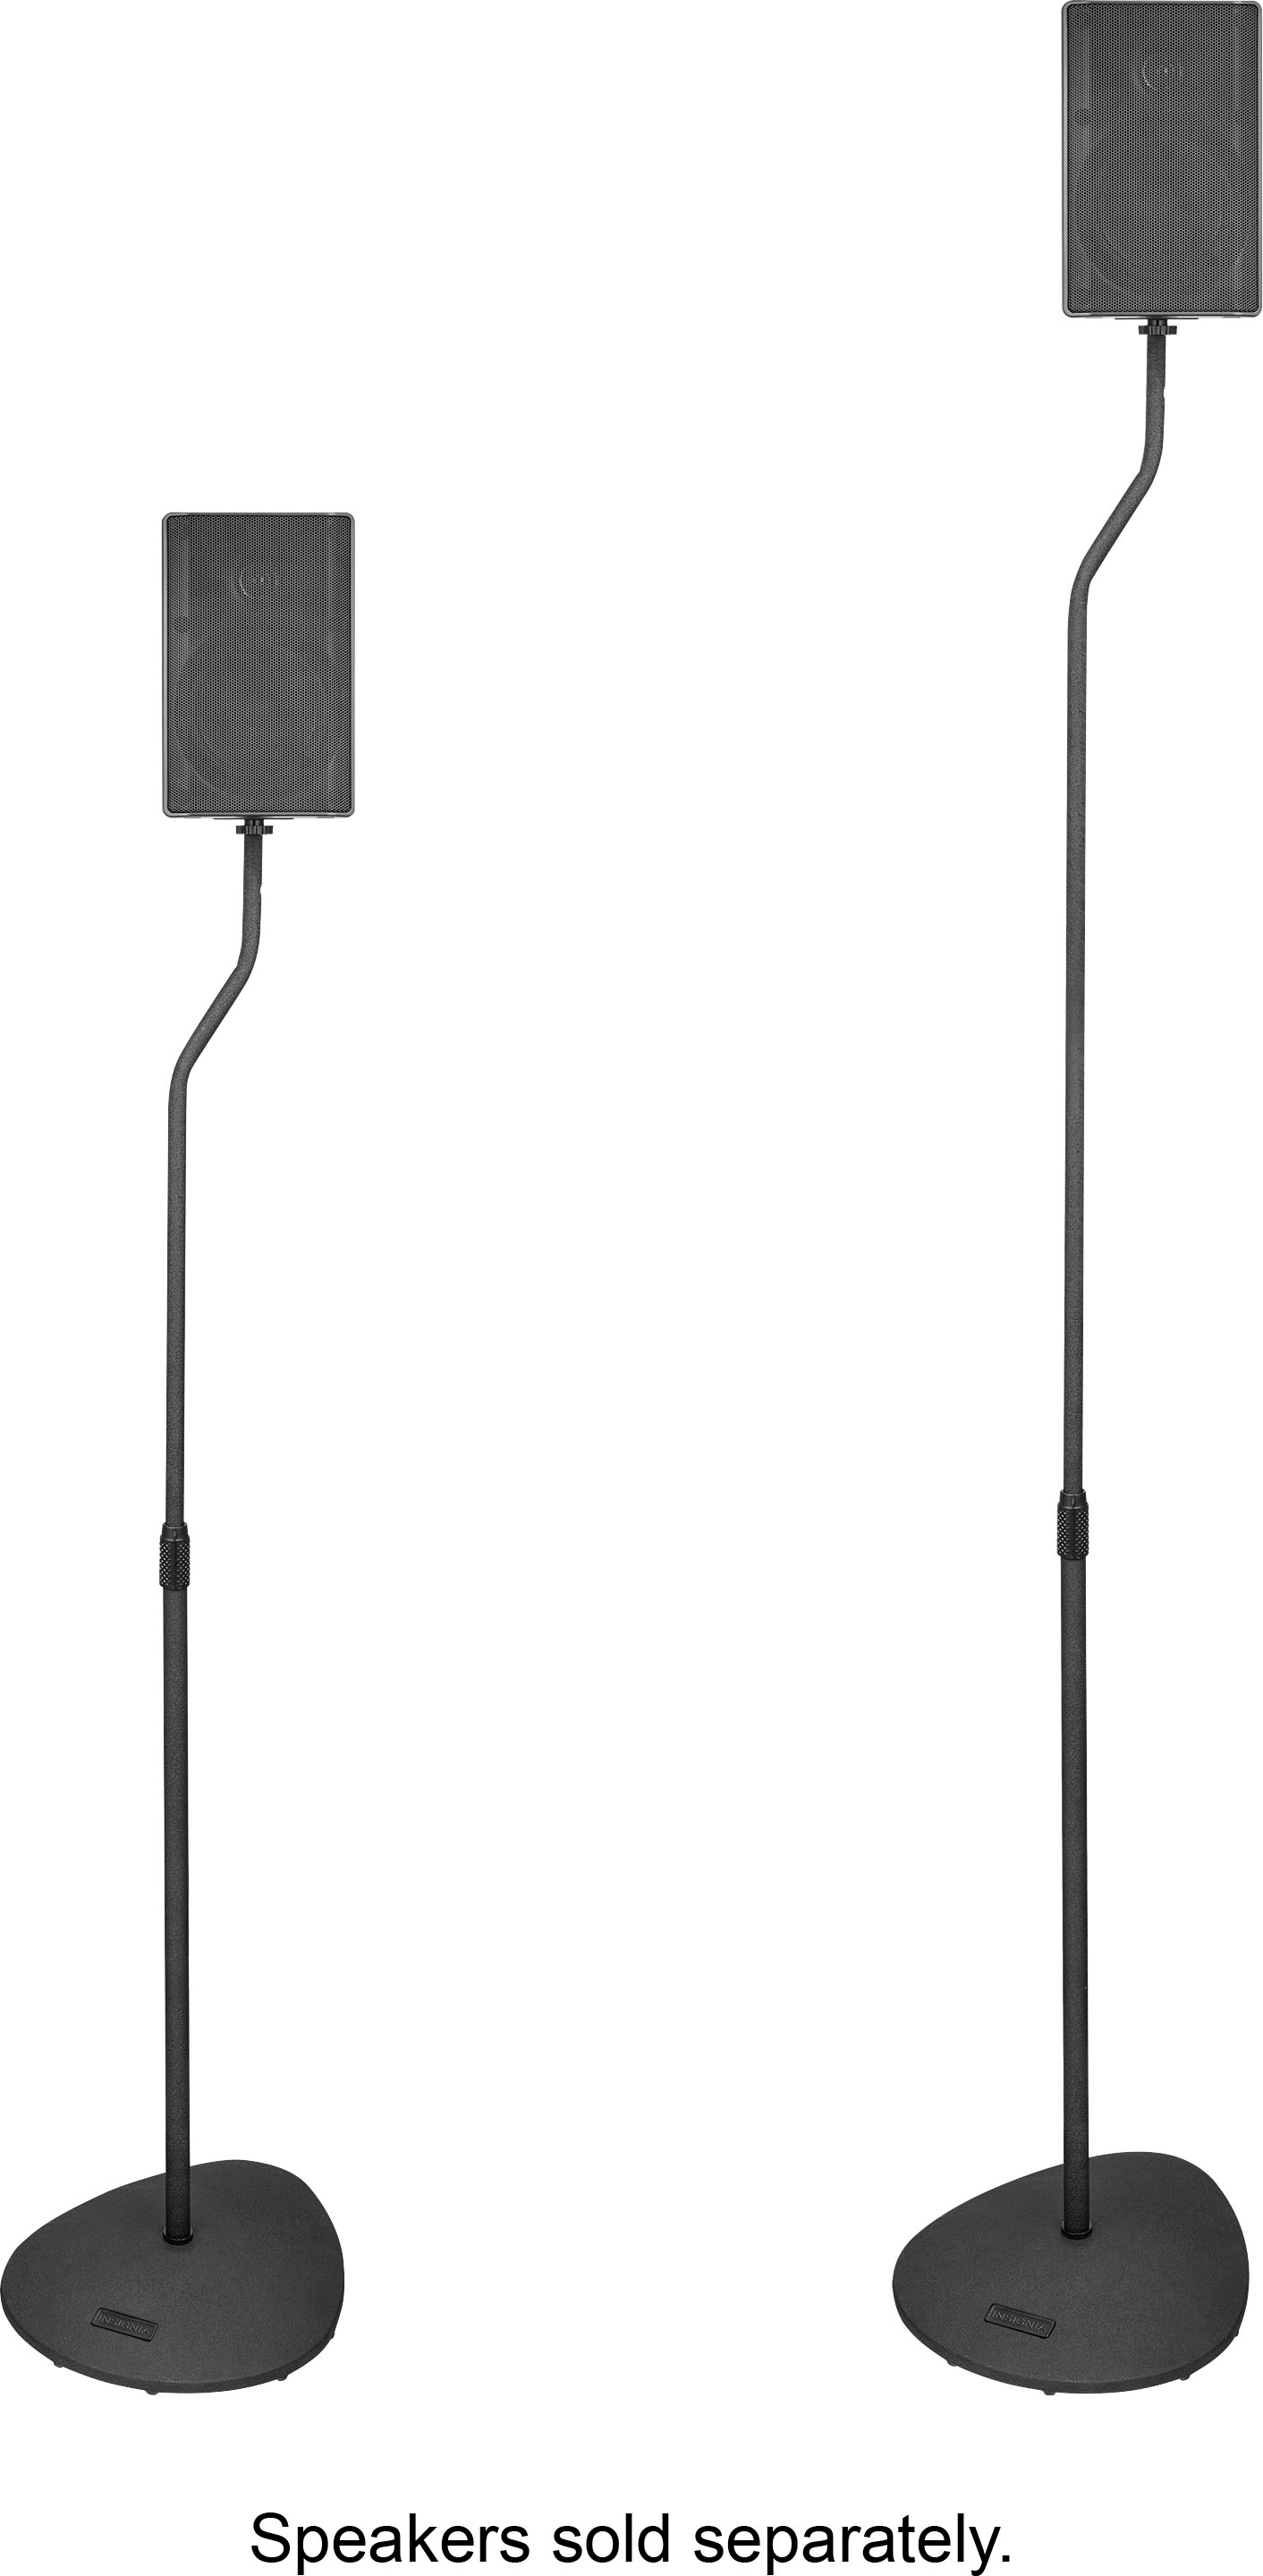 Angle View: MartinLogan - Installer Series Outdoor Speakers (Pair) - Black